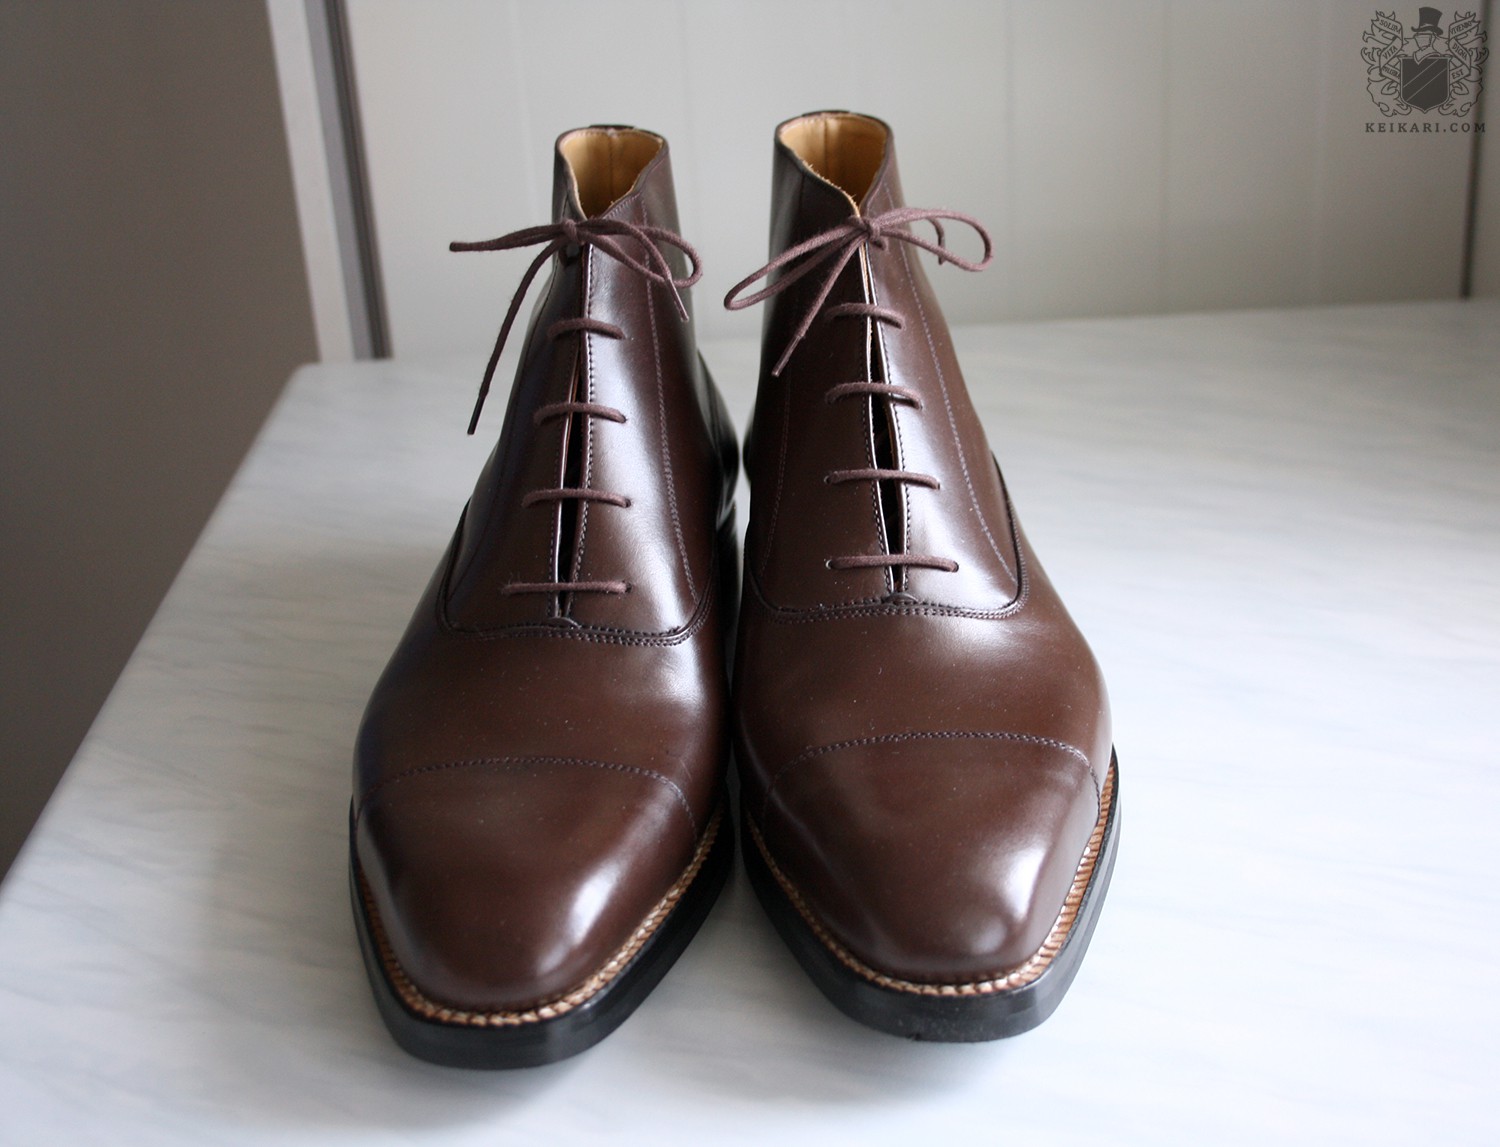 MTO_brown_calf_balmoral_boots_by_Laszlo_Vass_for_Keikari_dot_com.jpg